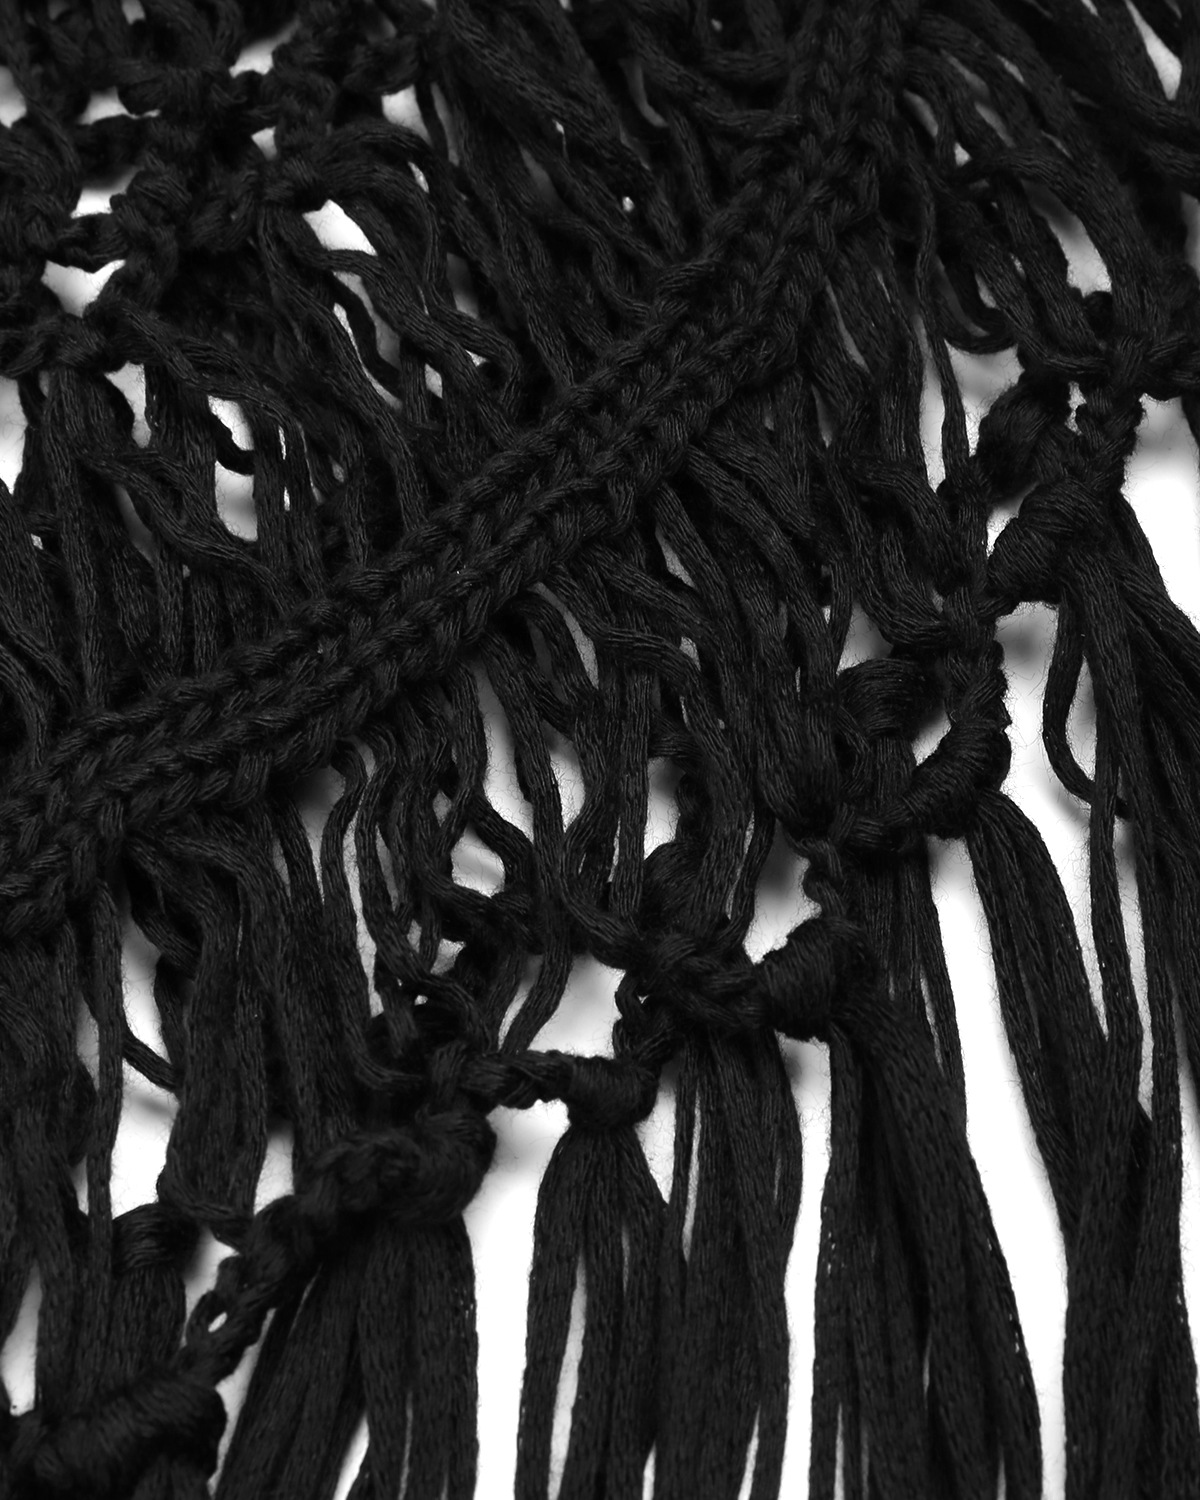 fashion solid color net knit sling beach dress NSMAN53325